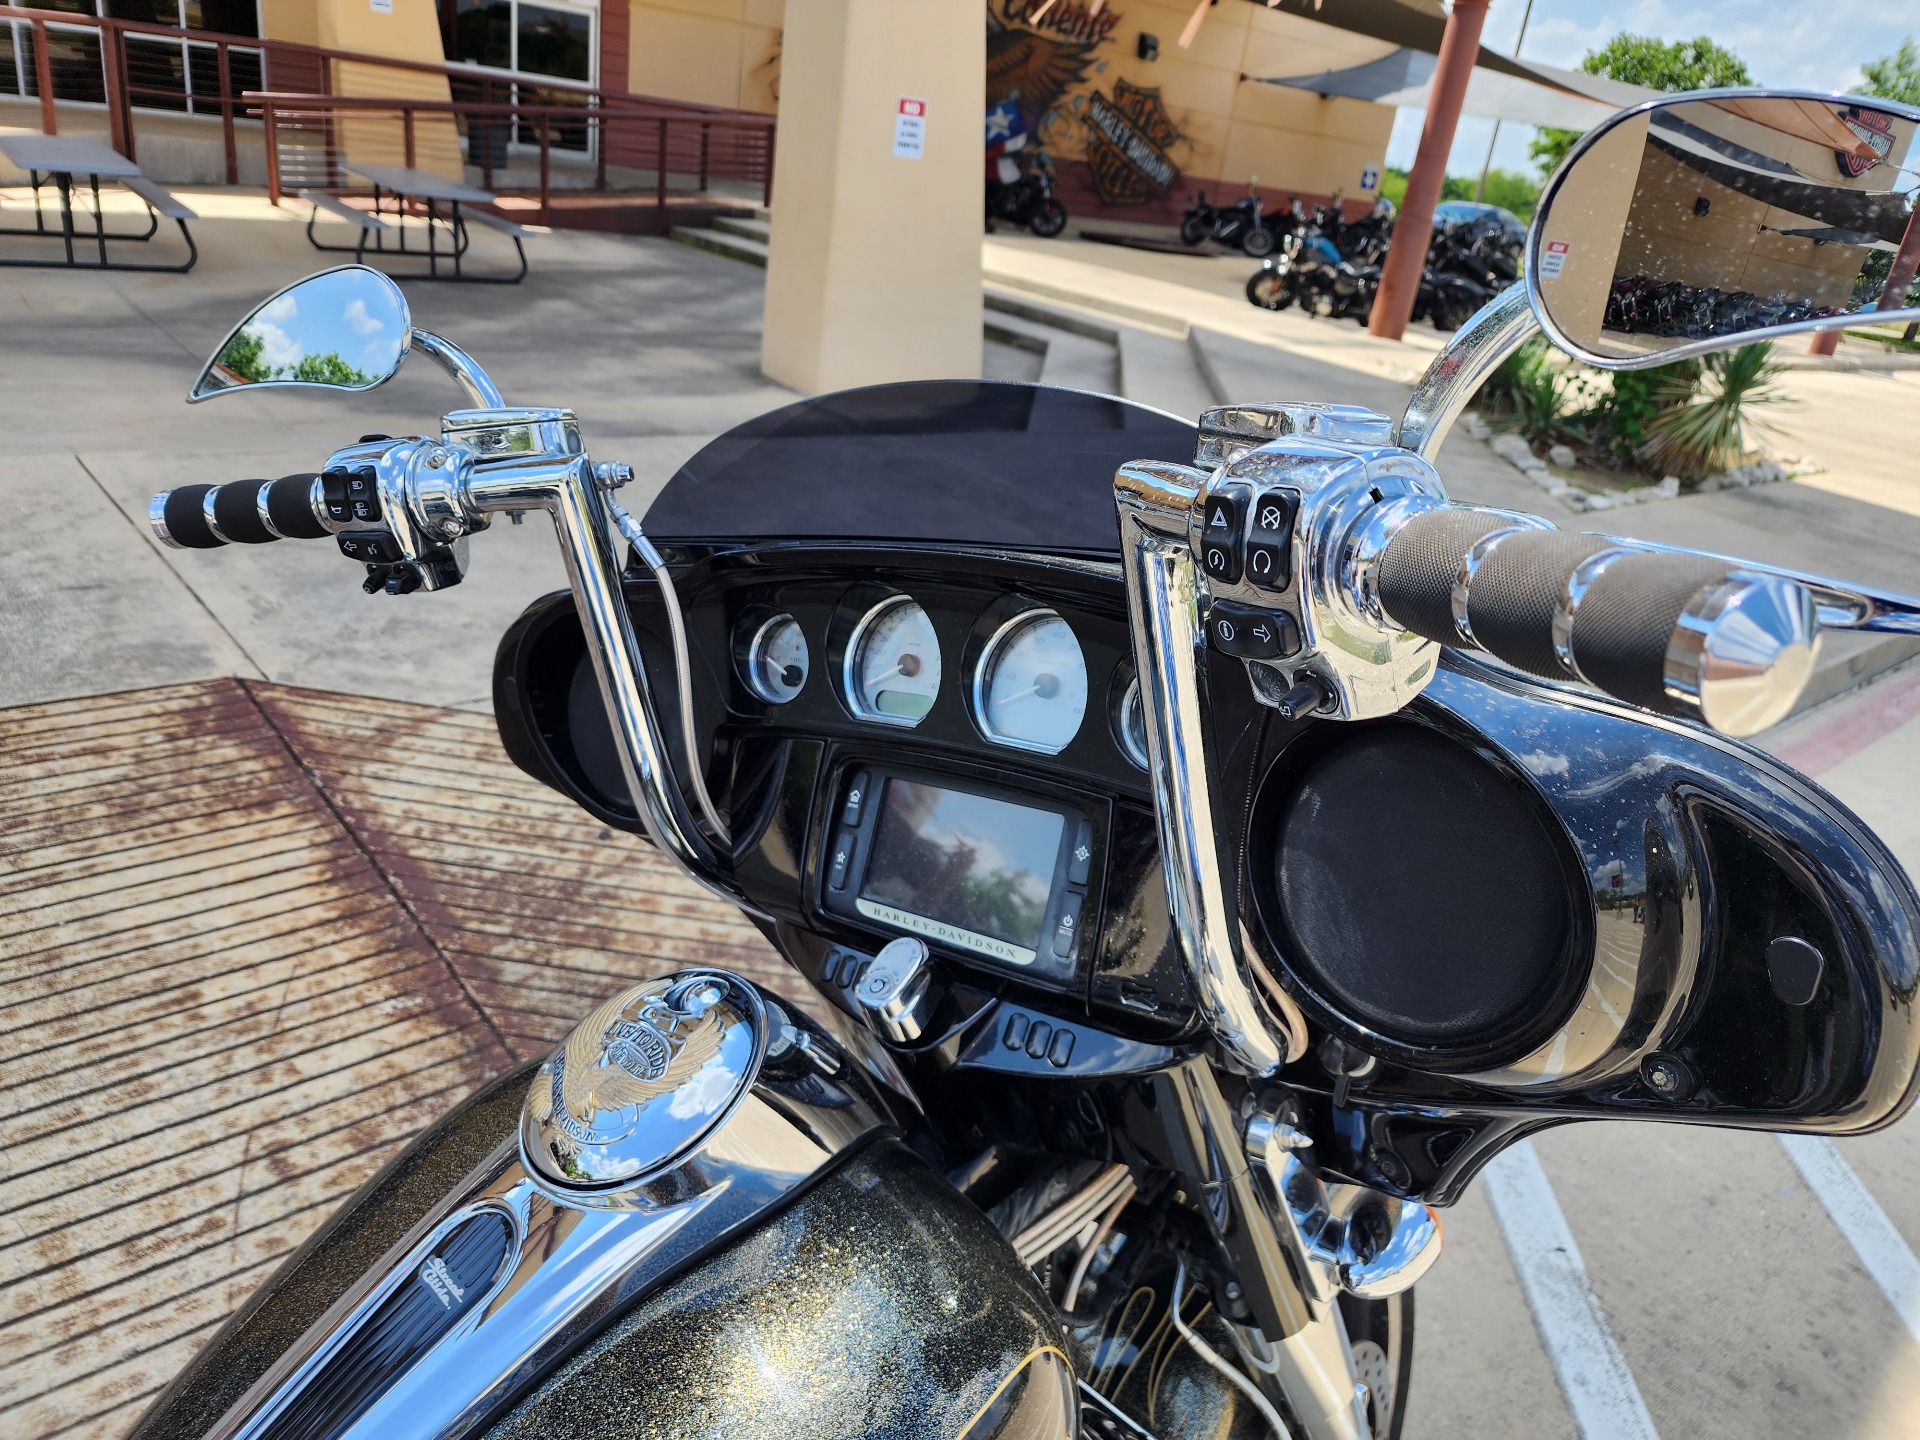 2016 Harley-Davidson Street Glide® Special in San Antonio, Texas - Photo 11